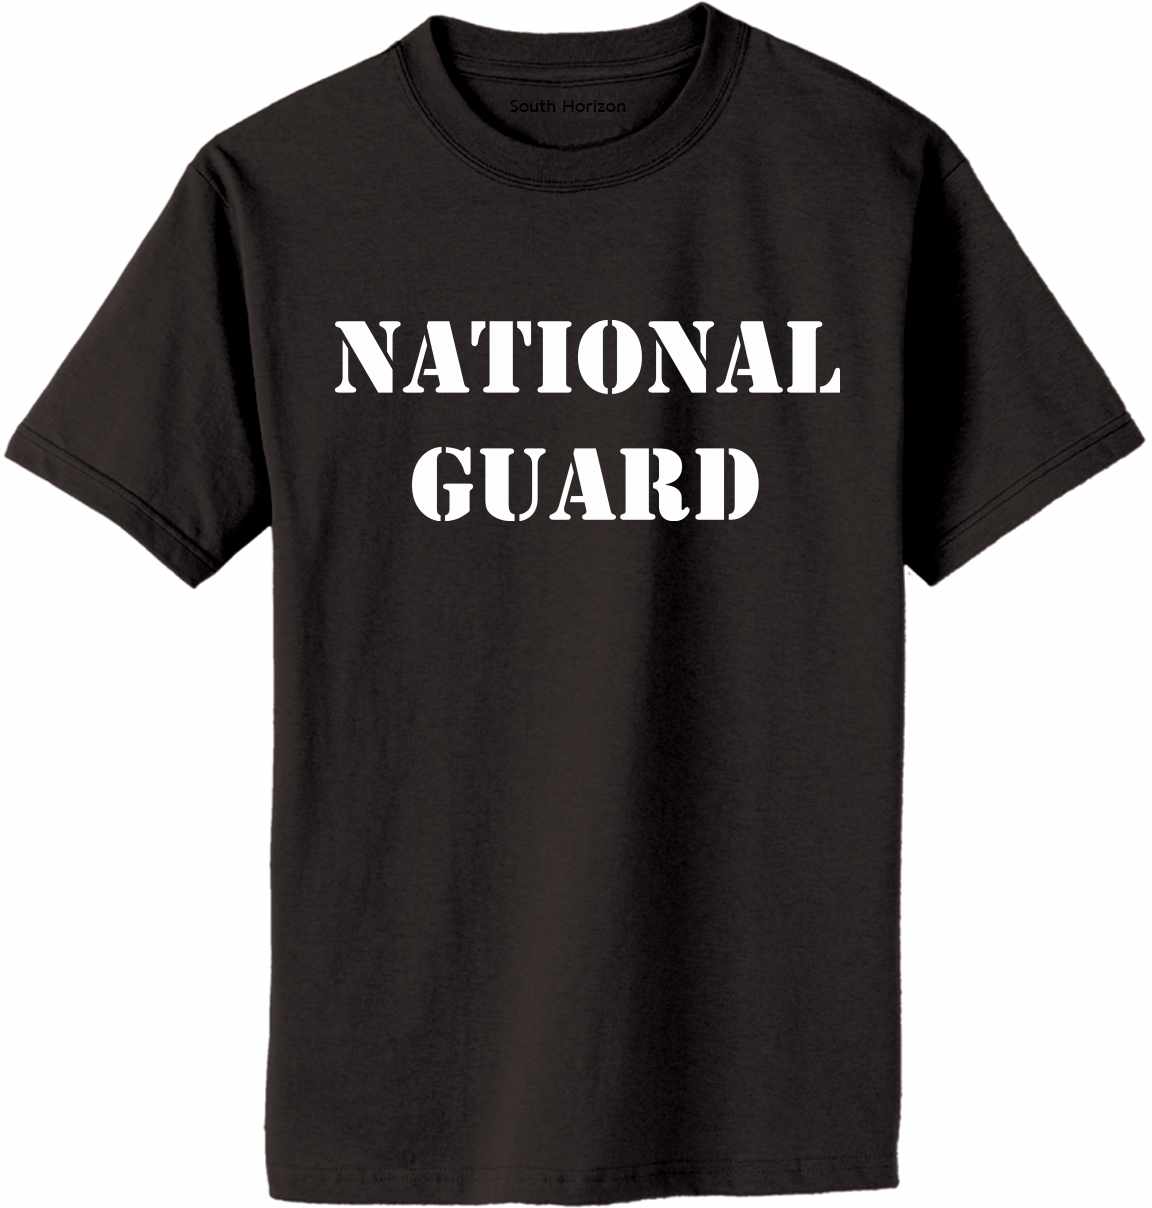 NATIONAL GUARD Adult T-Shirt